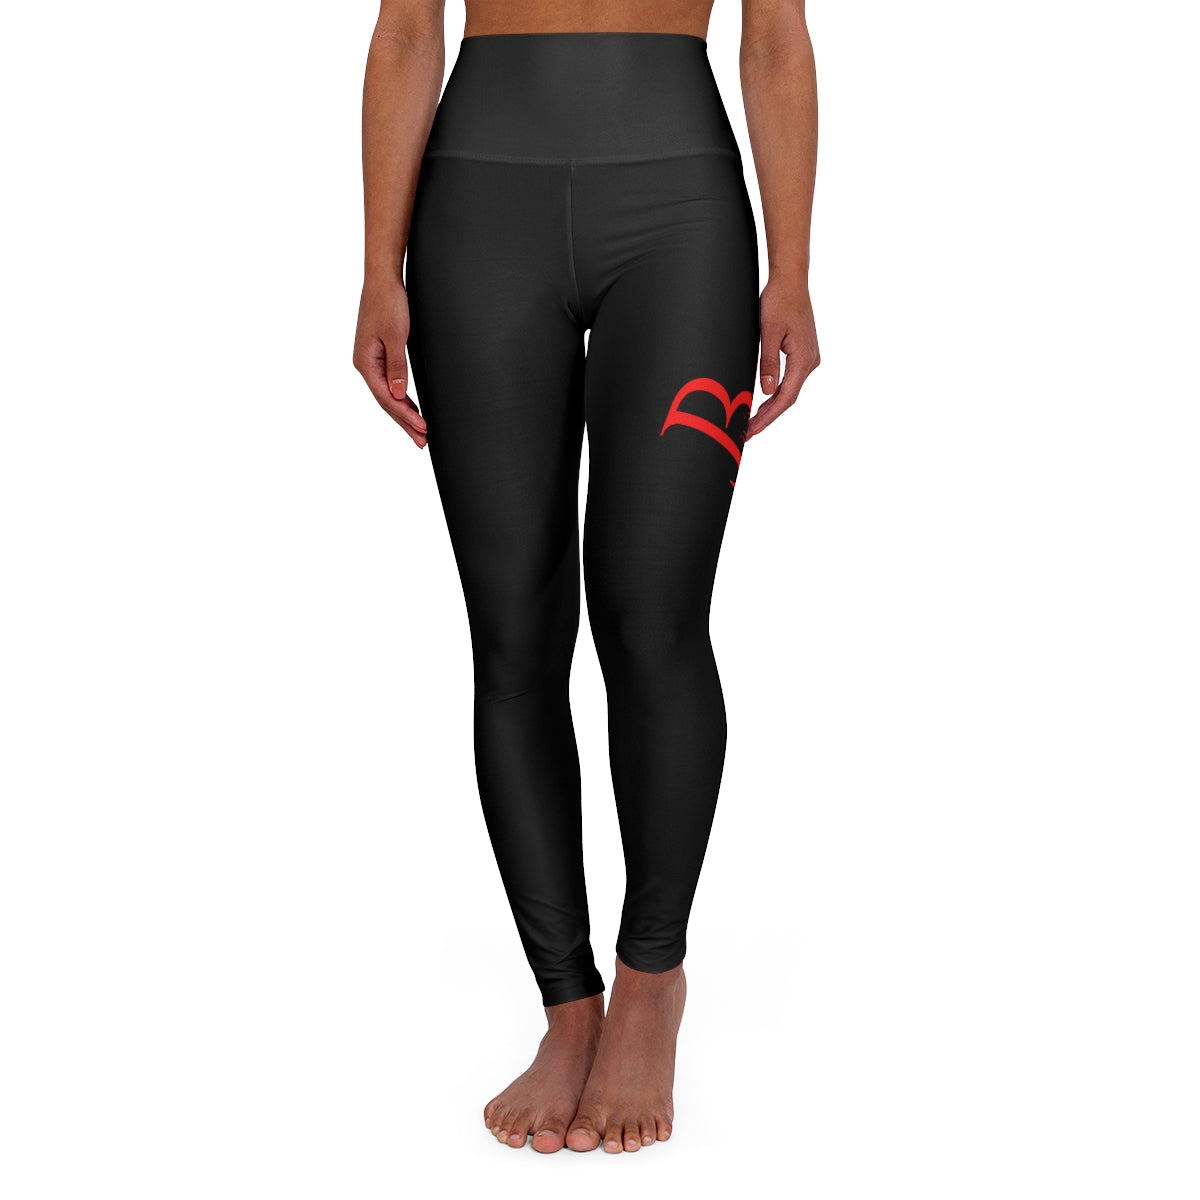 Black High Waisted Yoga Leggings with Red Bampire logo